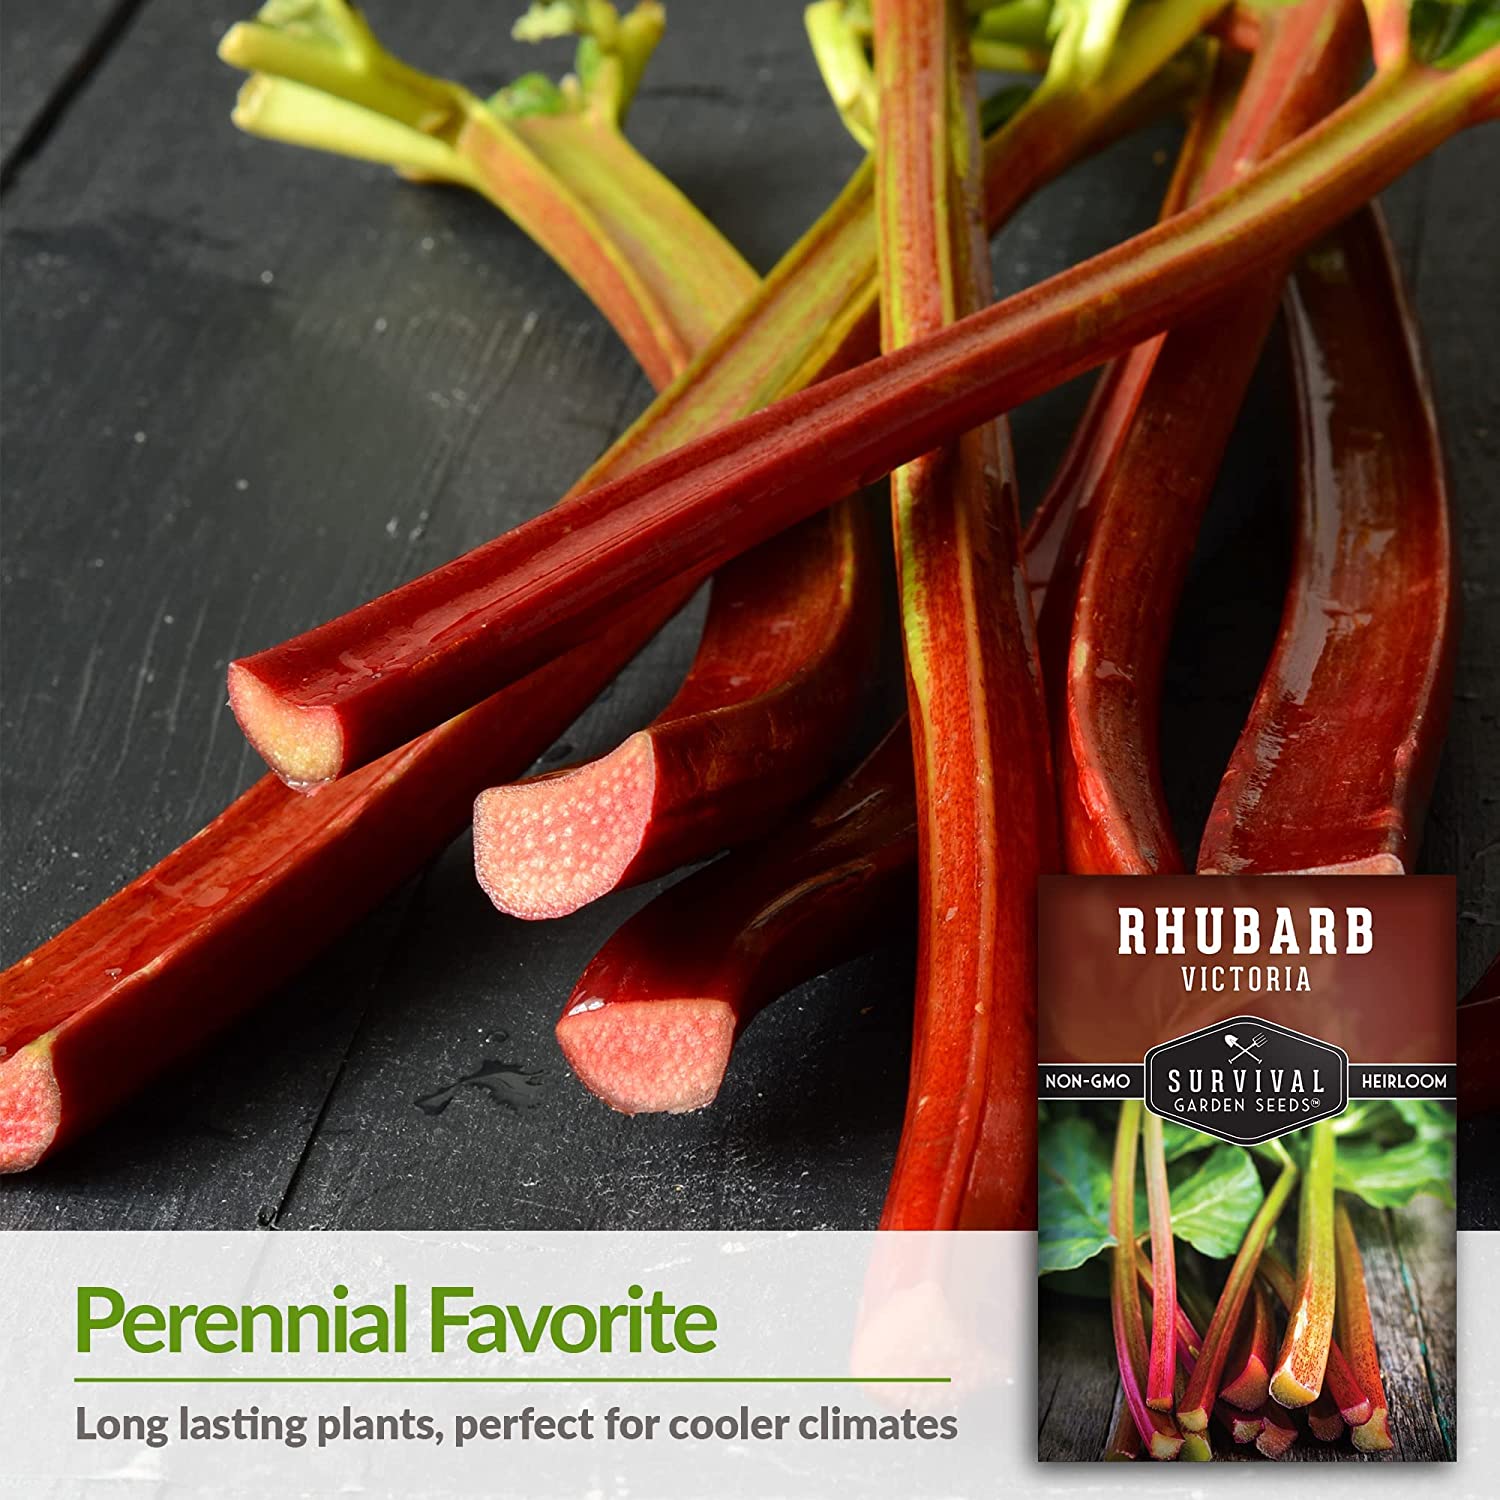 2 Packs Victoria Rhubarb Seeds - Non-GMO Heirloom Full Sun Perennial Vegetable - image 3 of 6